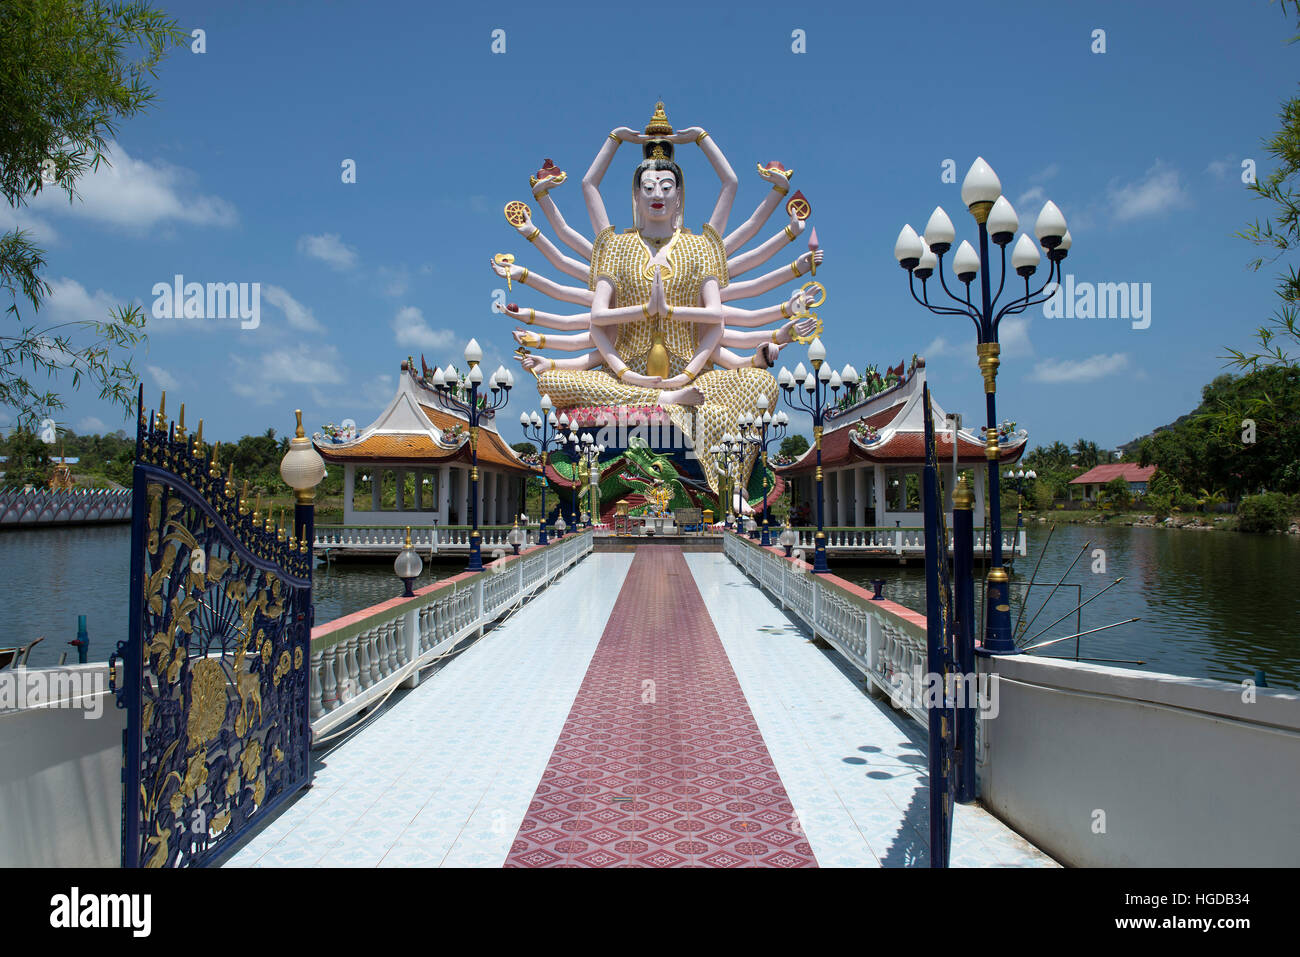 Thailand, Koh Samui, Temple, Wat Plai Laem, Guanyin statue, Chinese, Stock Photo